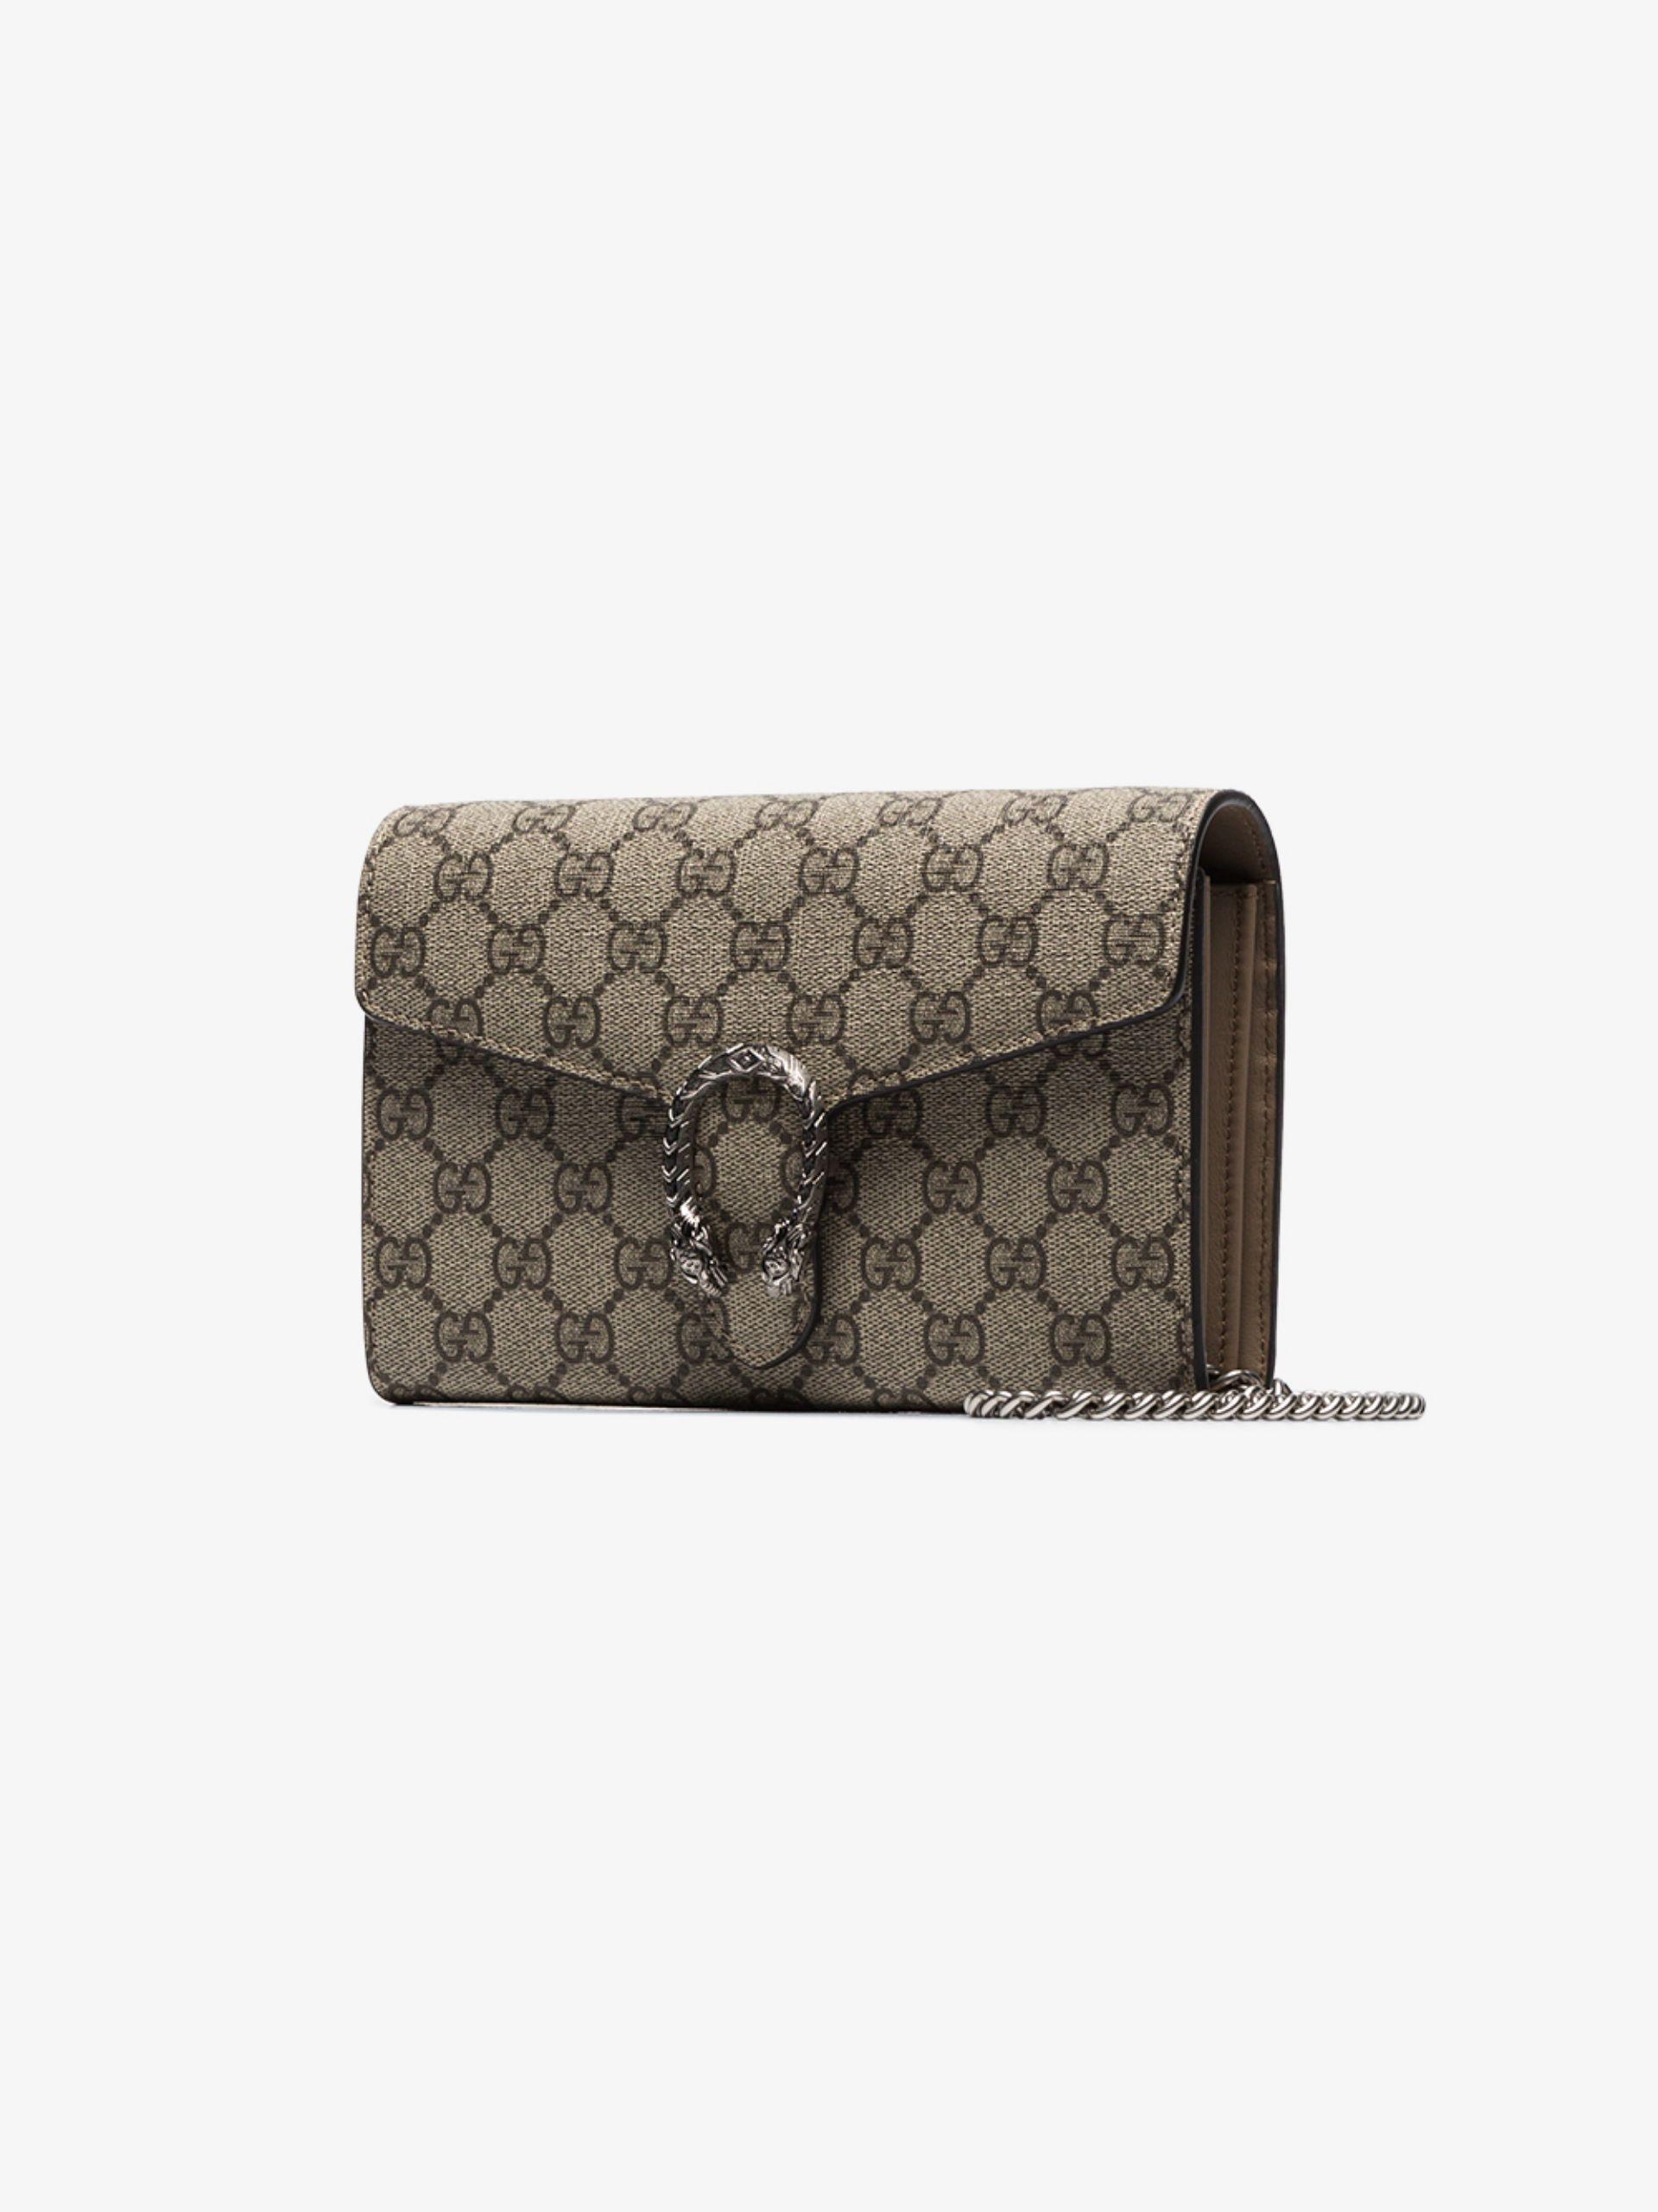 Gucci Canvas Dionysus GG Supreme Chain Shoulder Bag - Save 